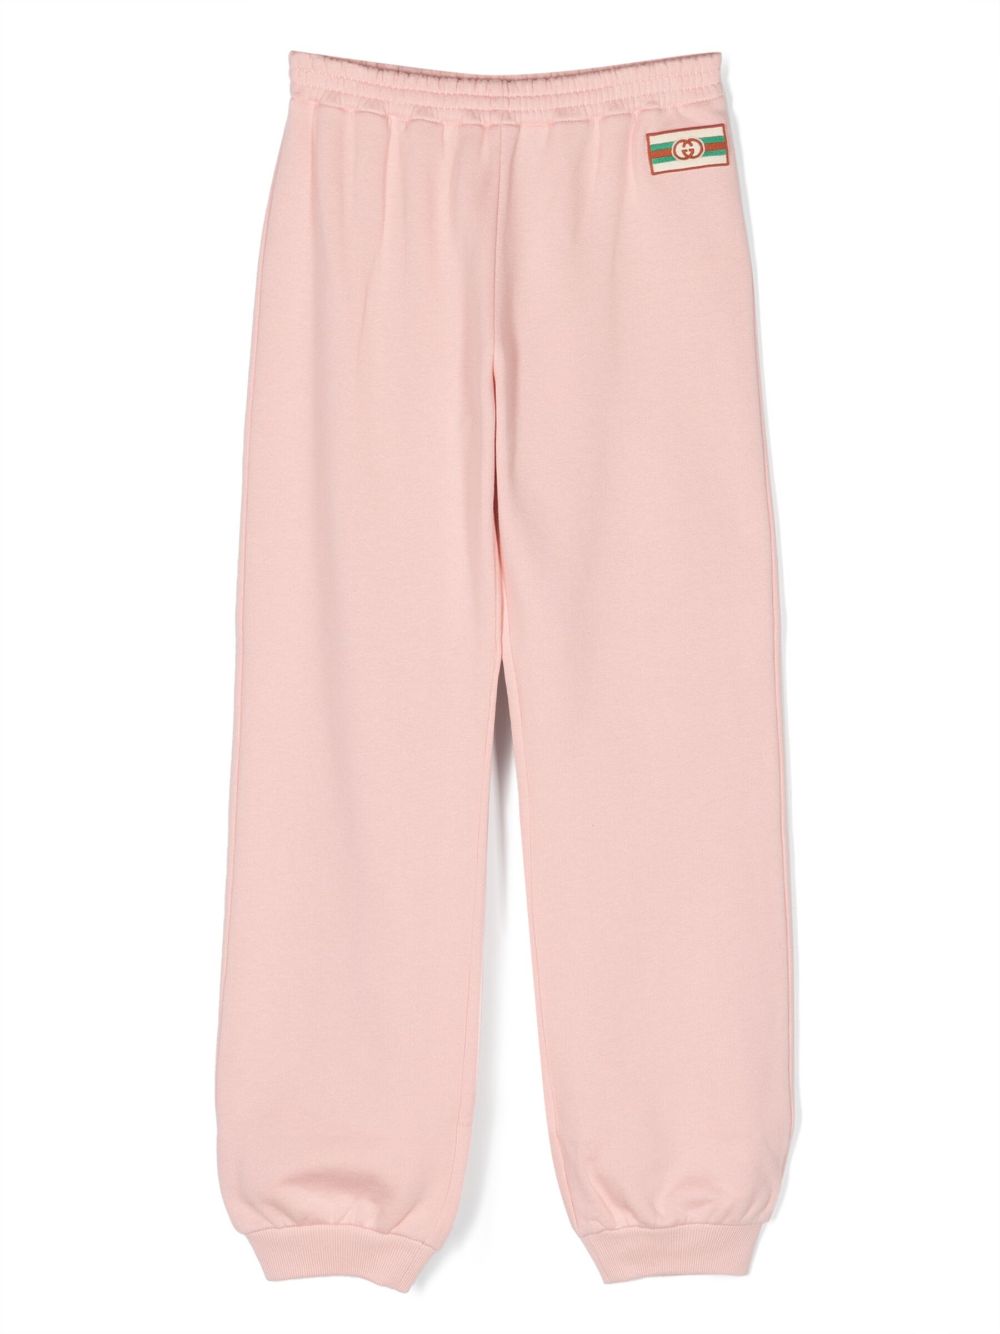 Pantaloni rosa unisex